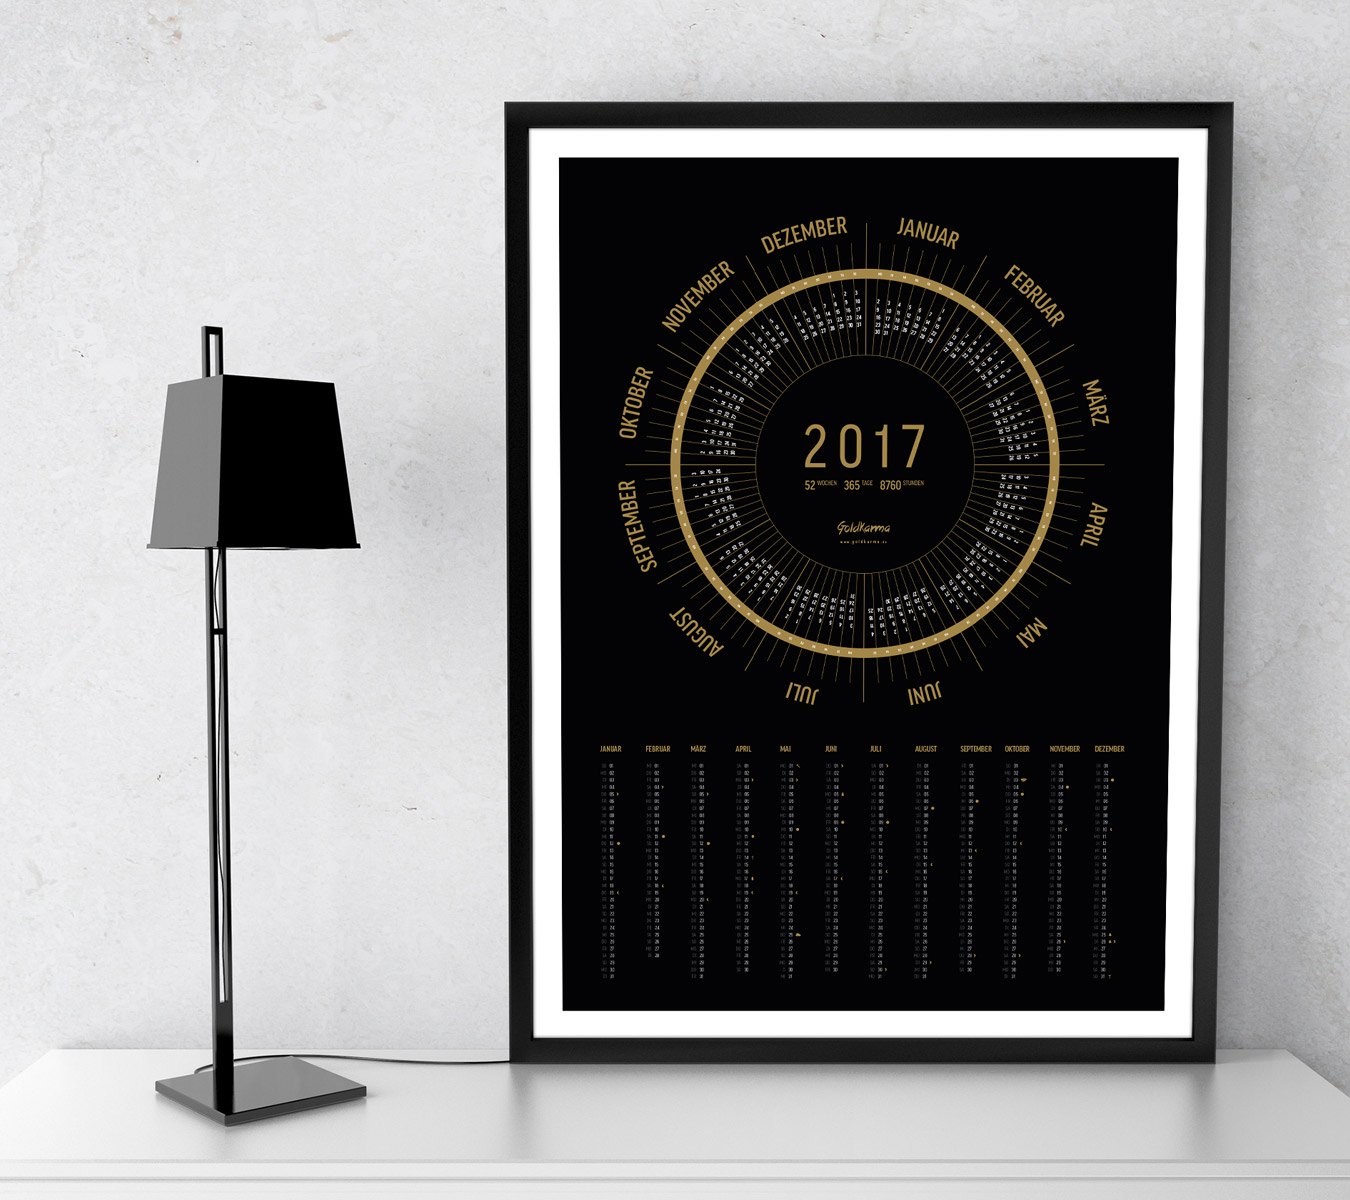 Jahreskalender 2017 (6)